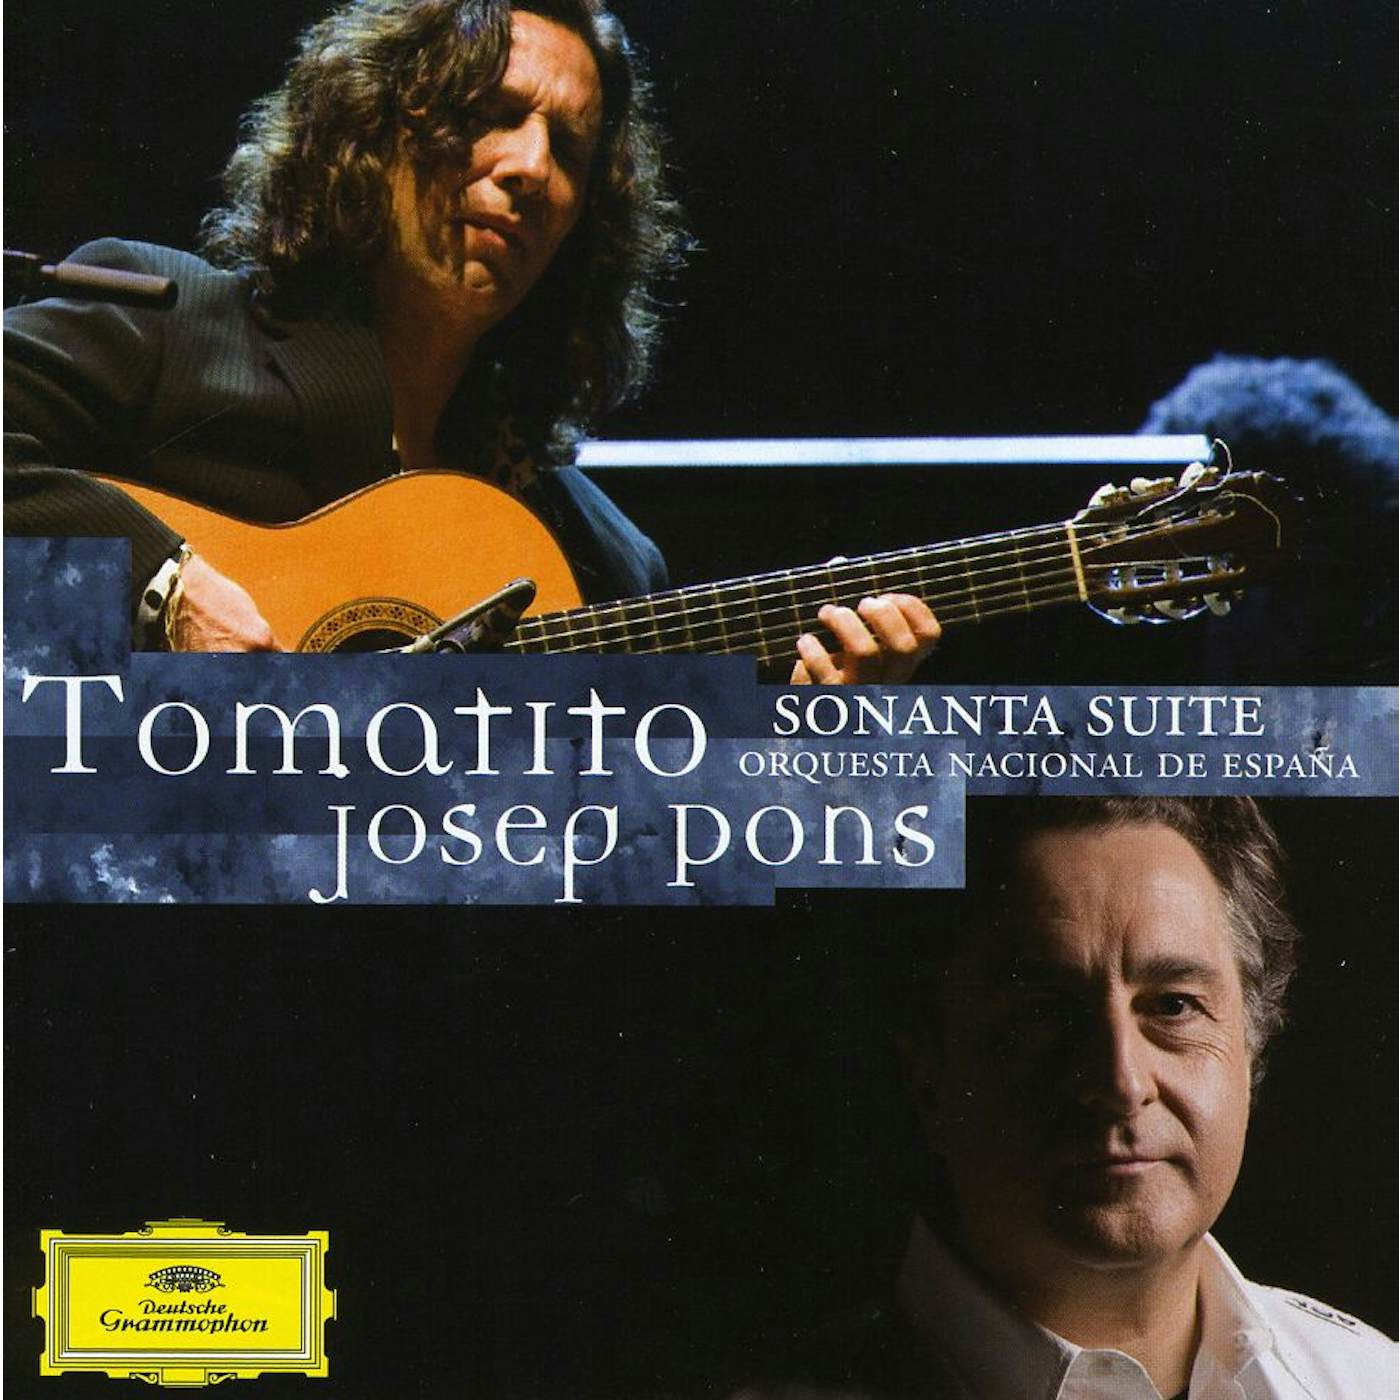 Tomatito SONANTA SUITE CD